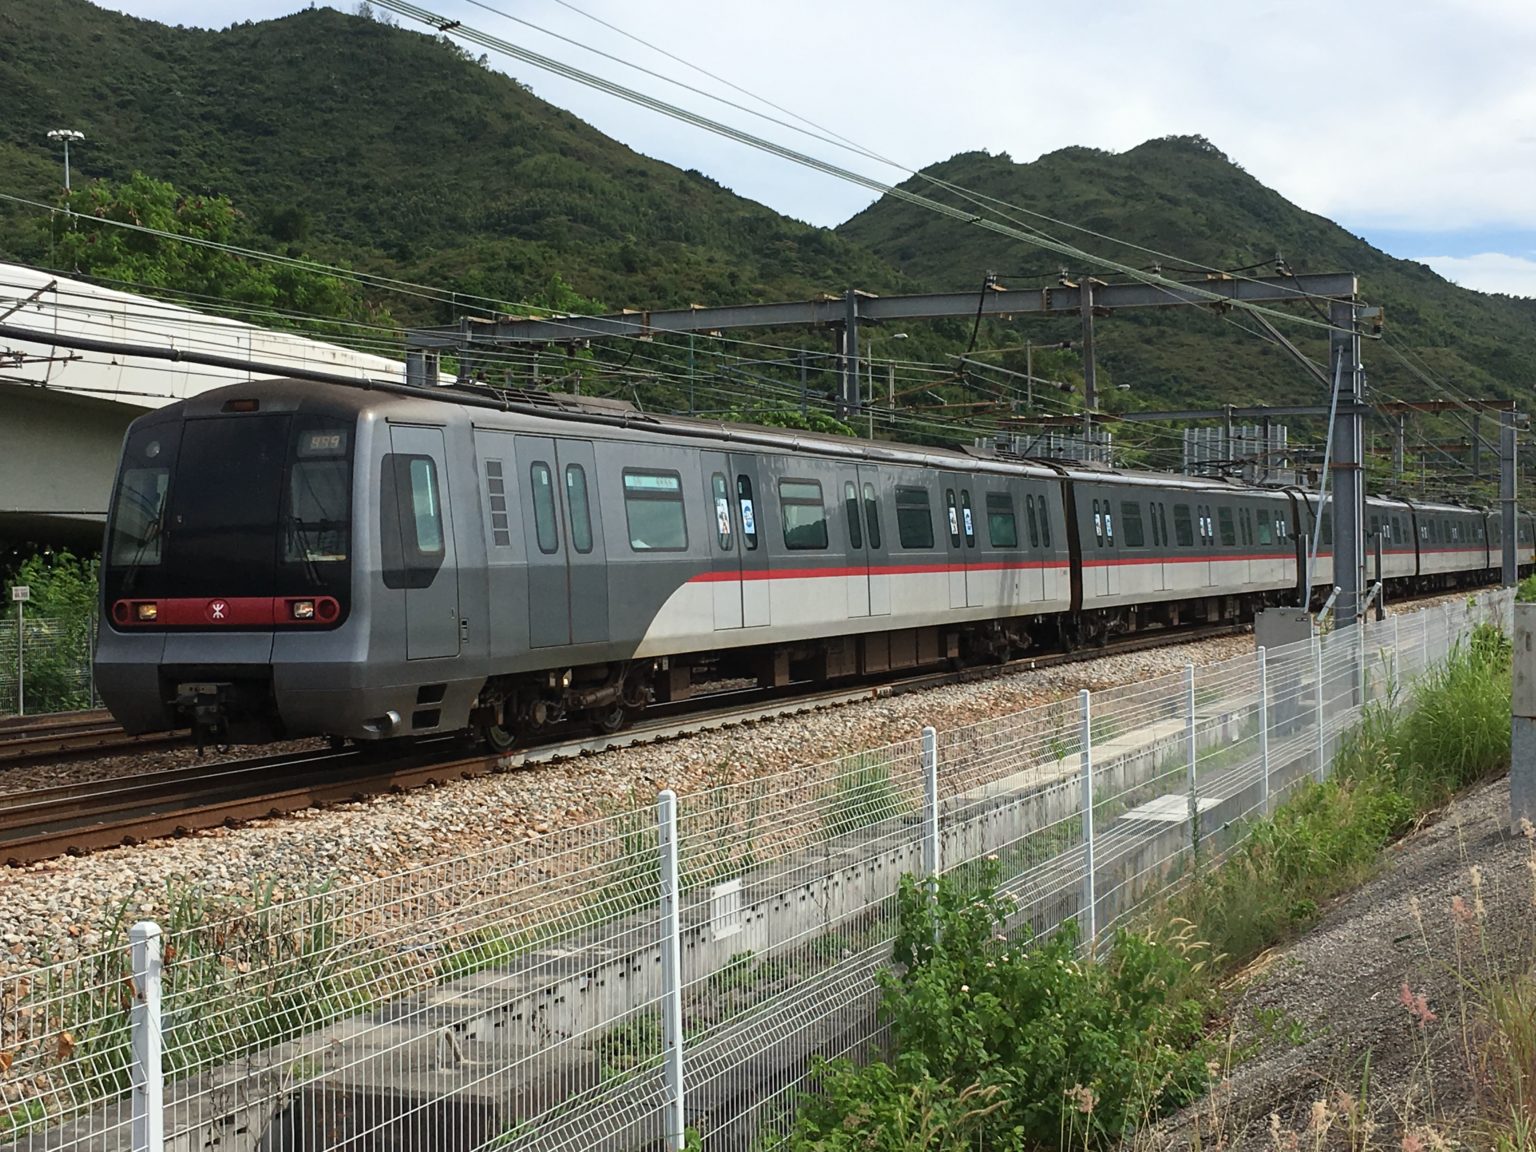 Hong Kong Government Announces Tung Chung Line Extension Railway News